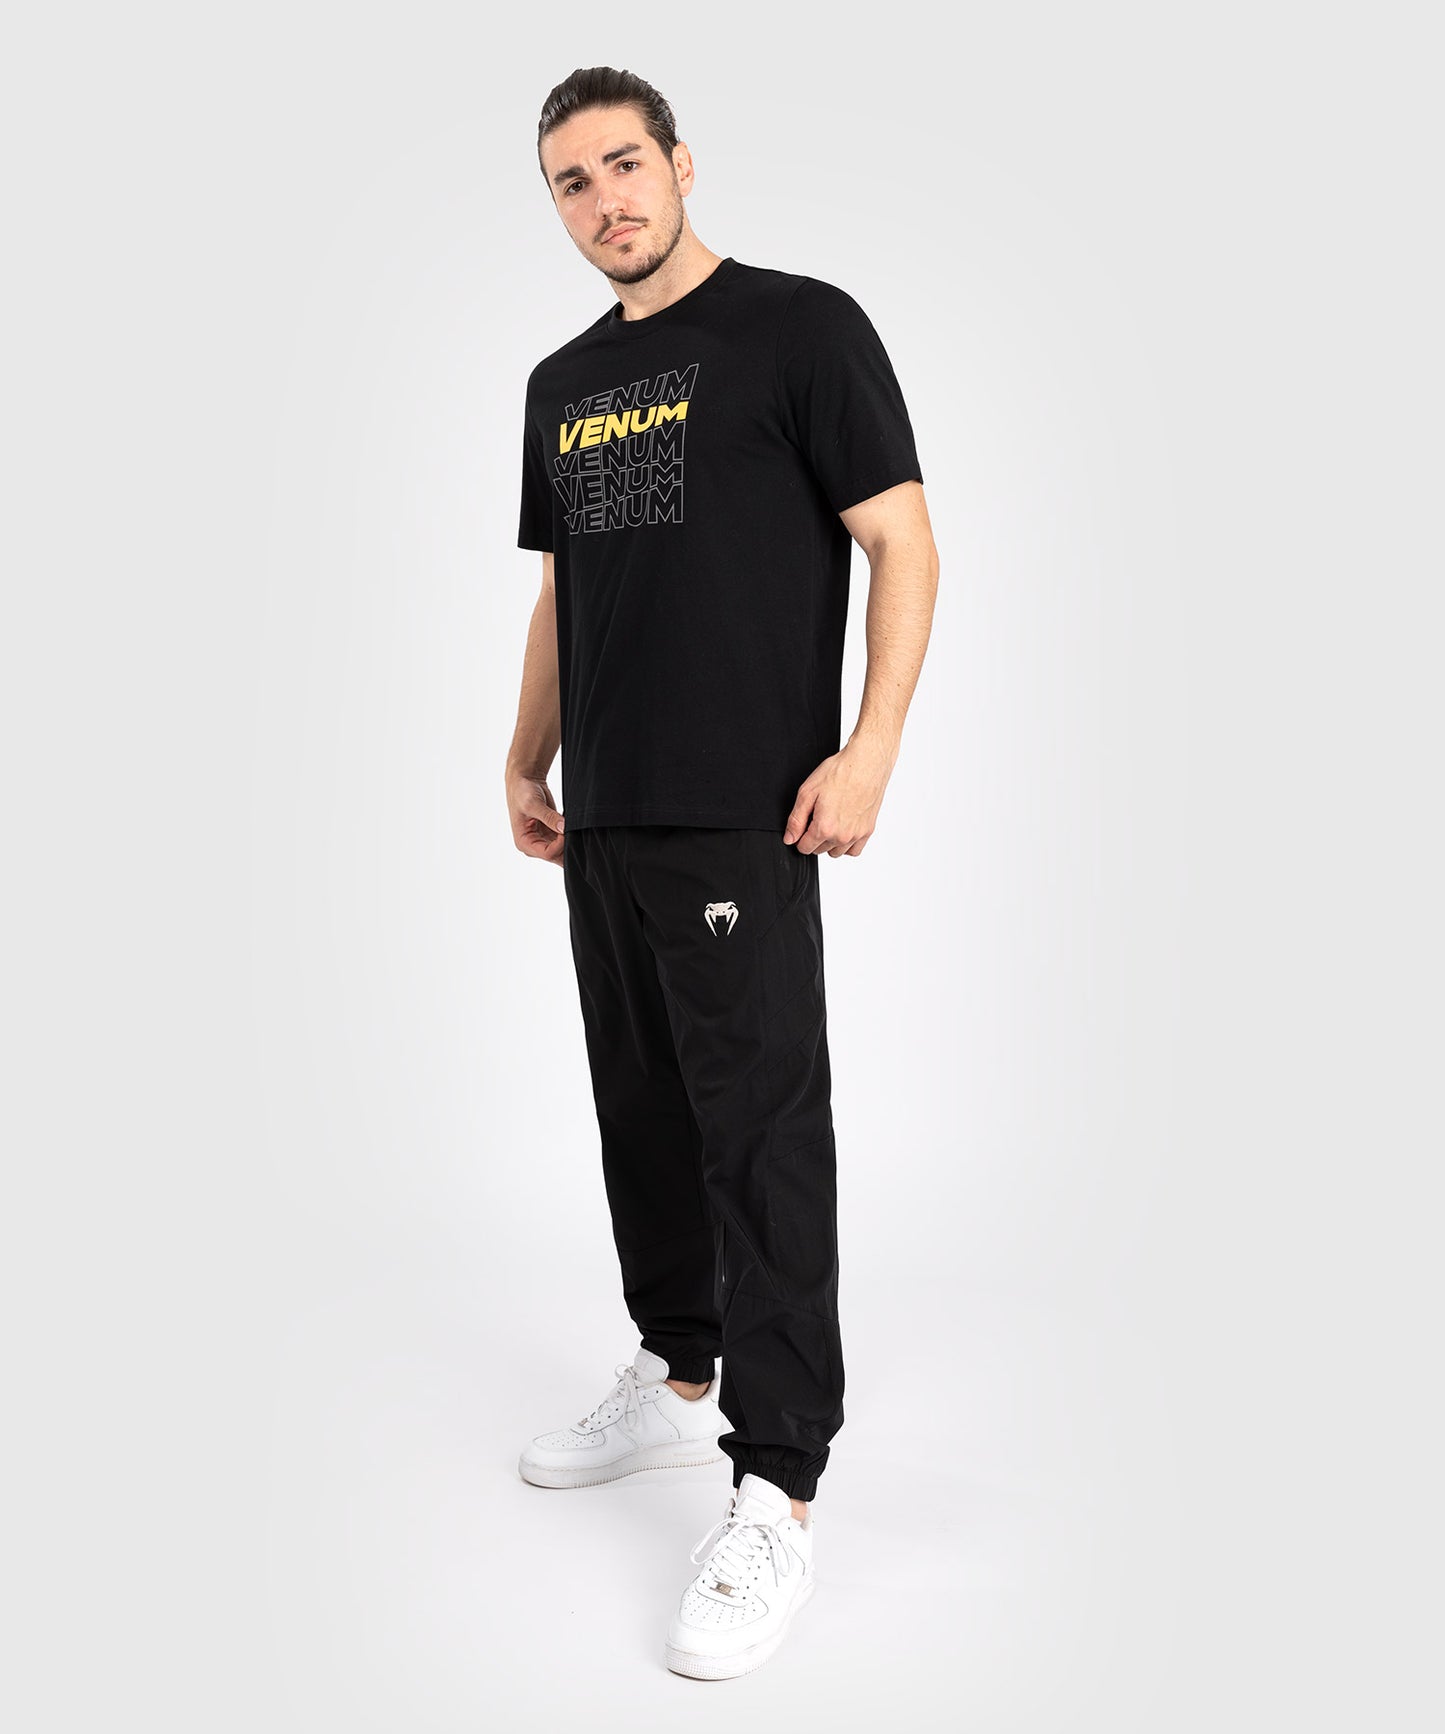 Venum Vertigo Men's Short Sleeve T-shirt - Black/Yellow